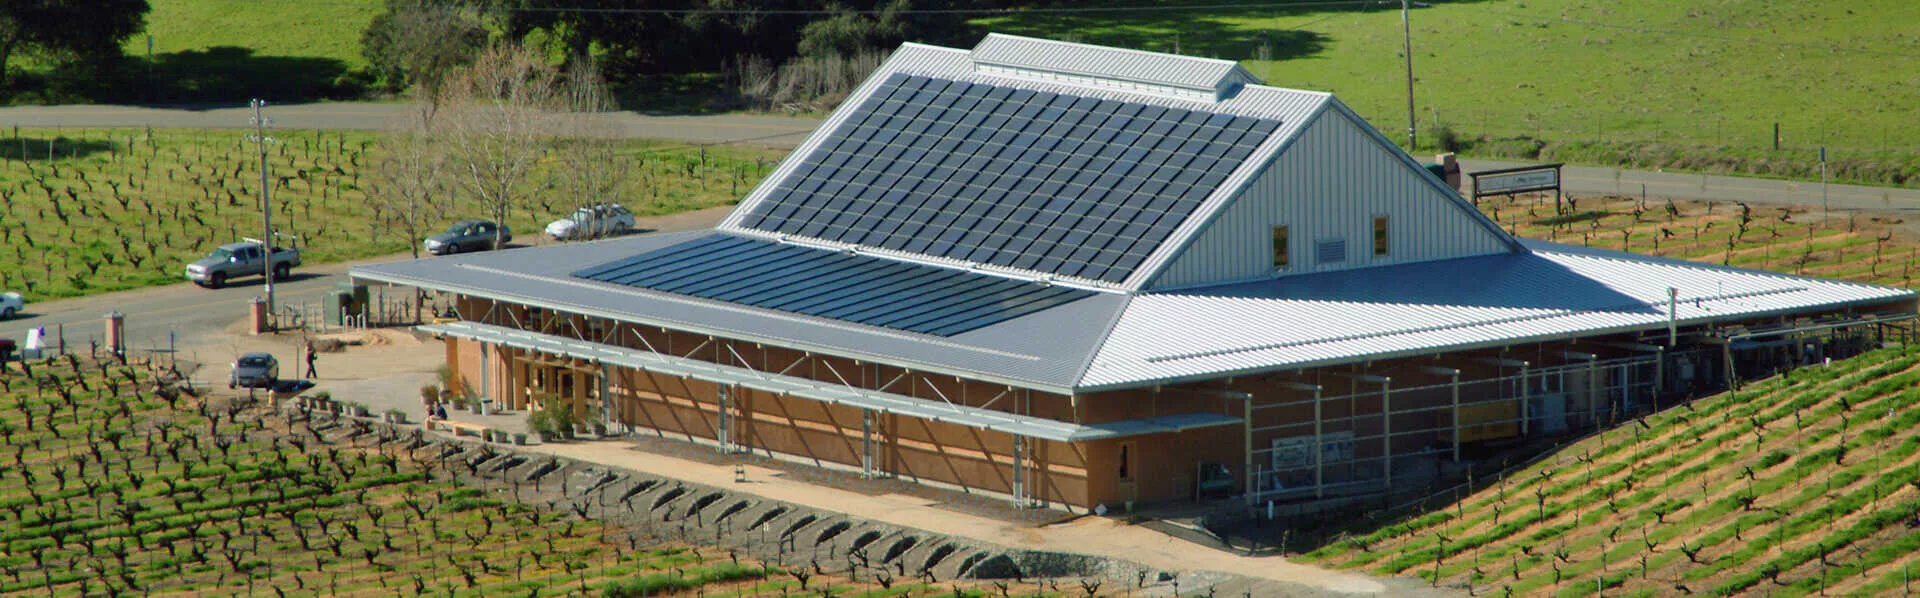 Ridgewine solar powered small business in Japan